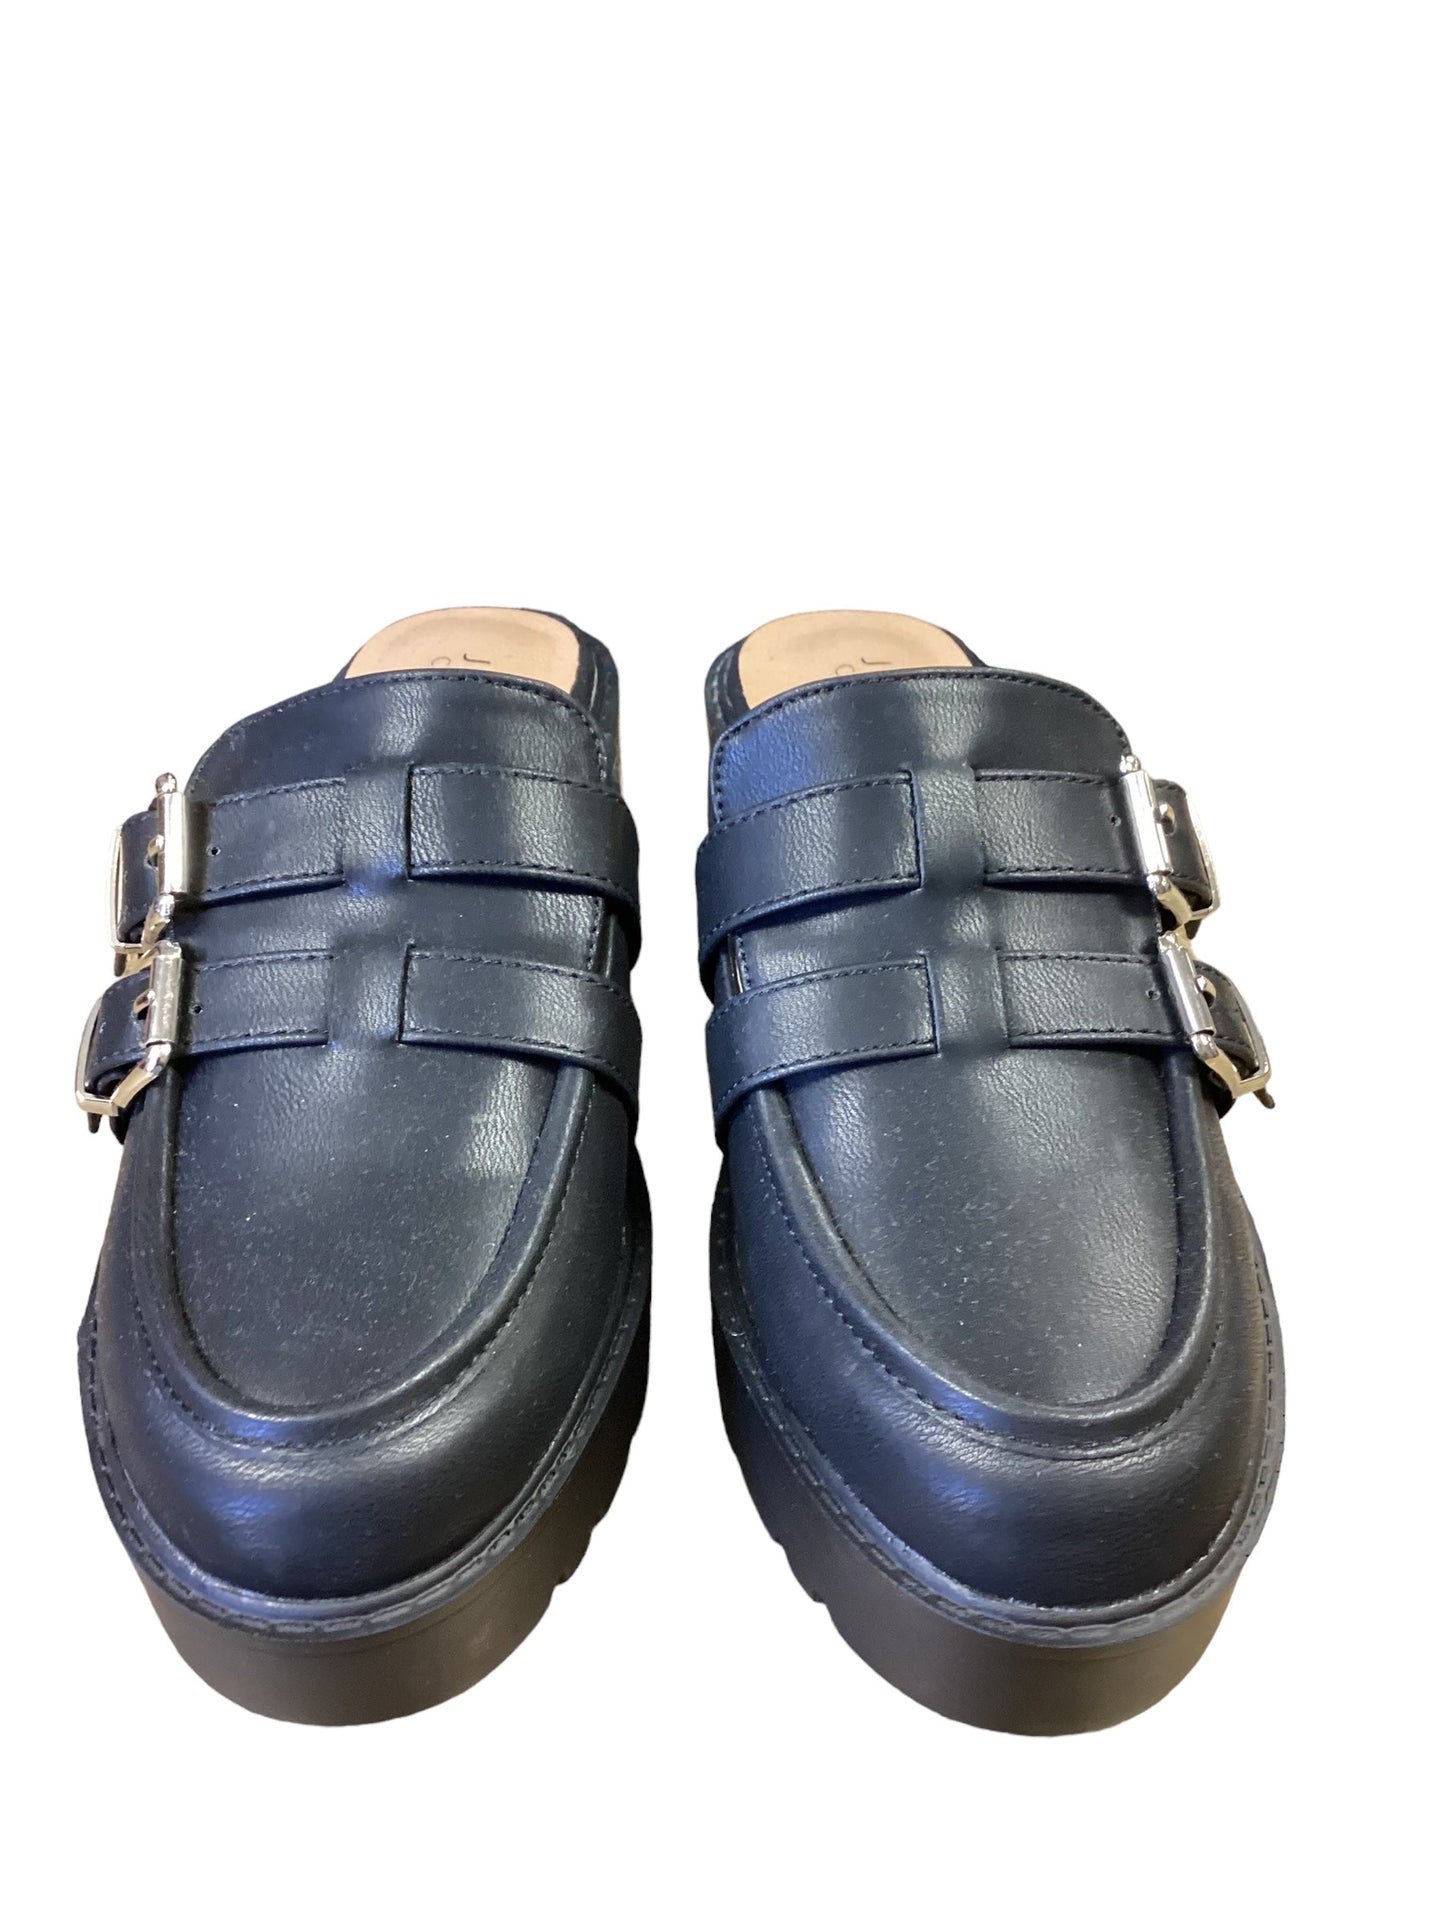 Black Shoes Heels Block Journee, Size 6